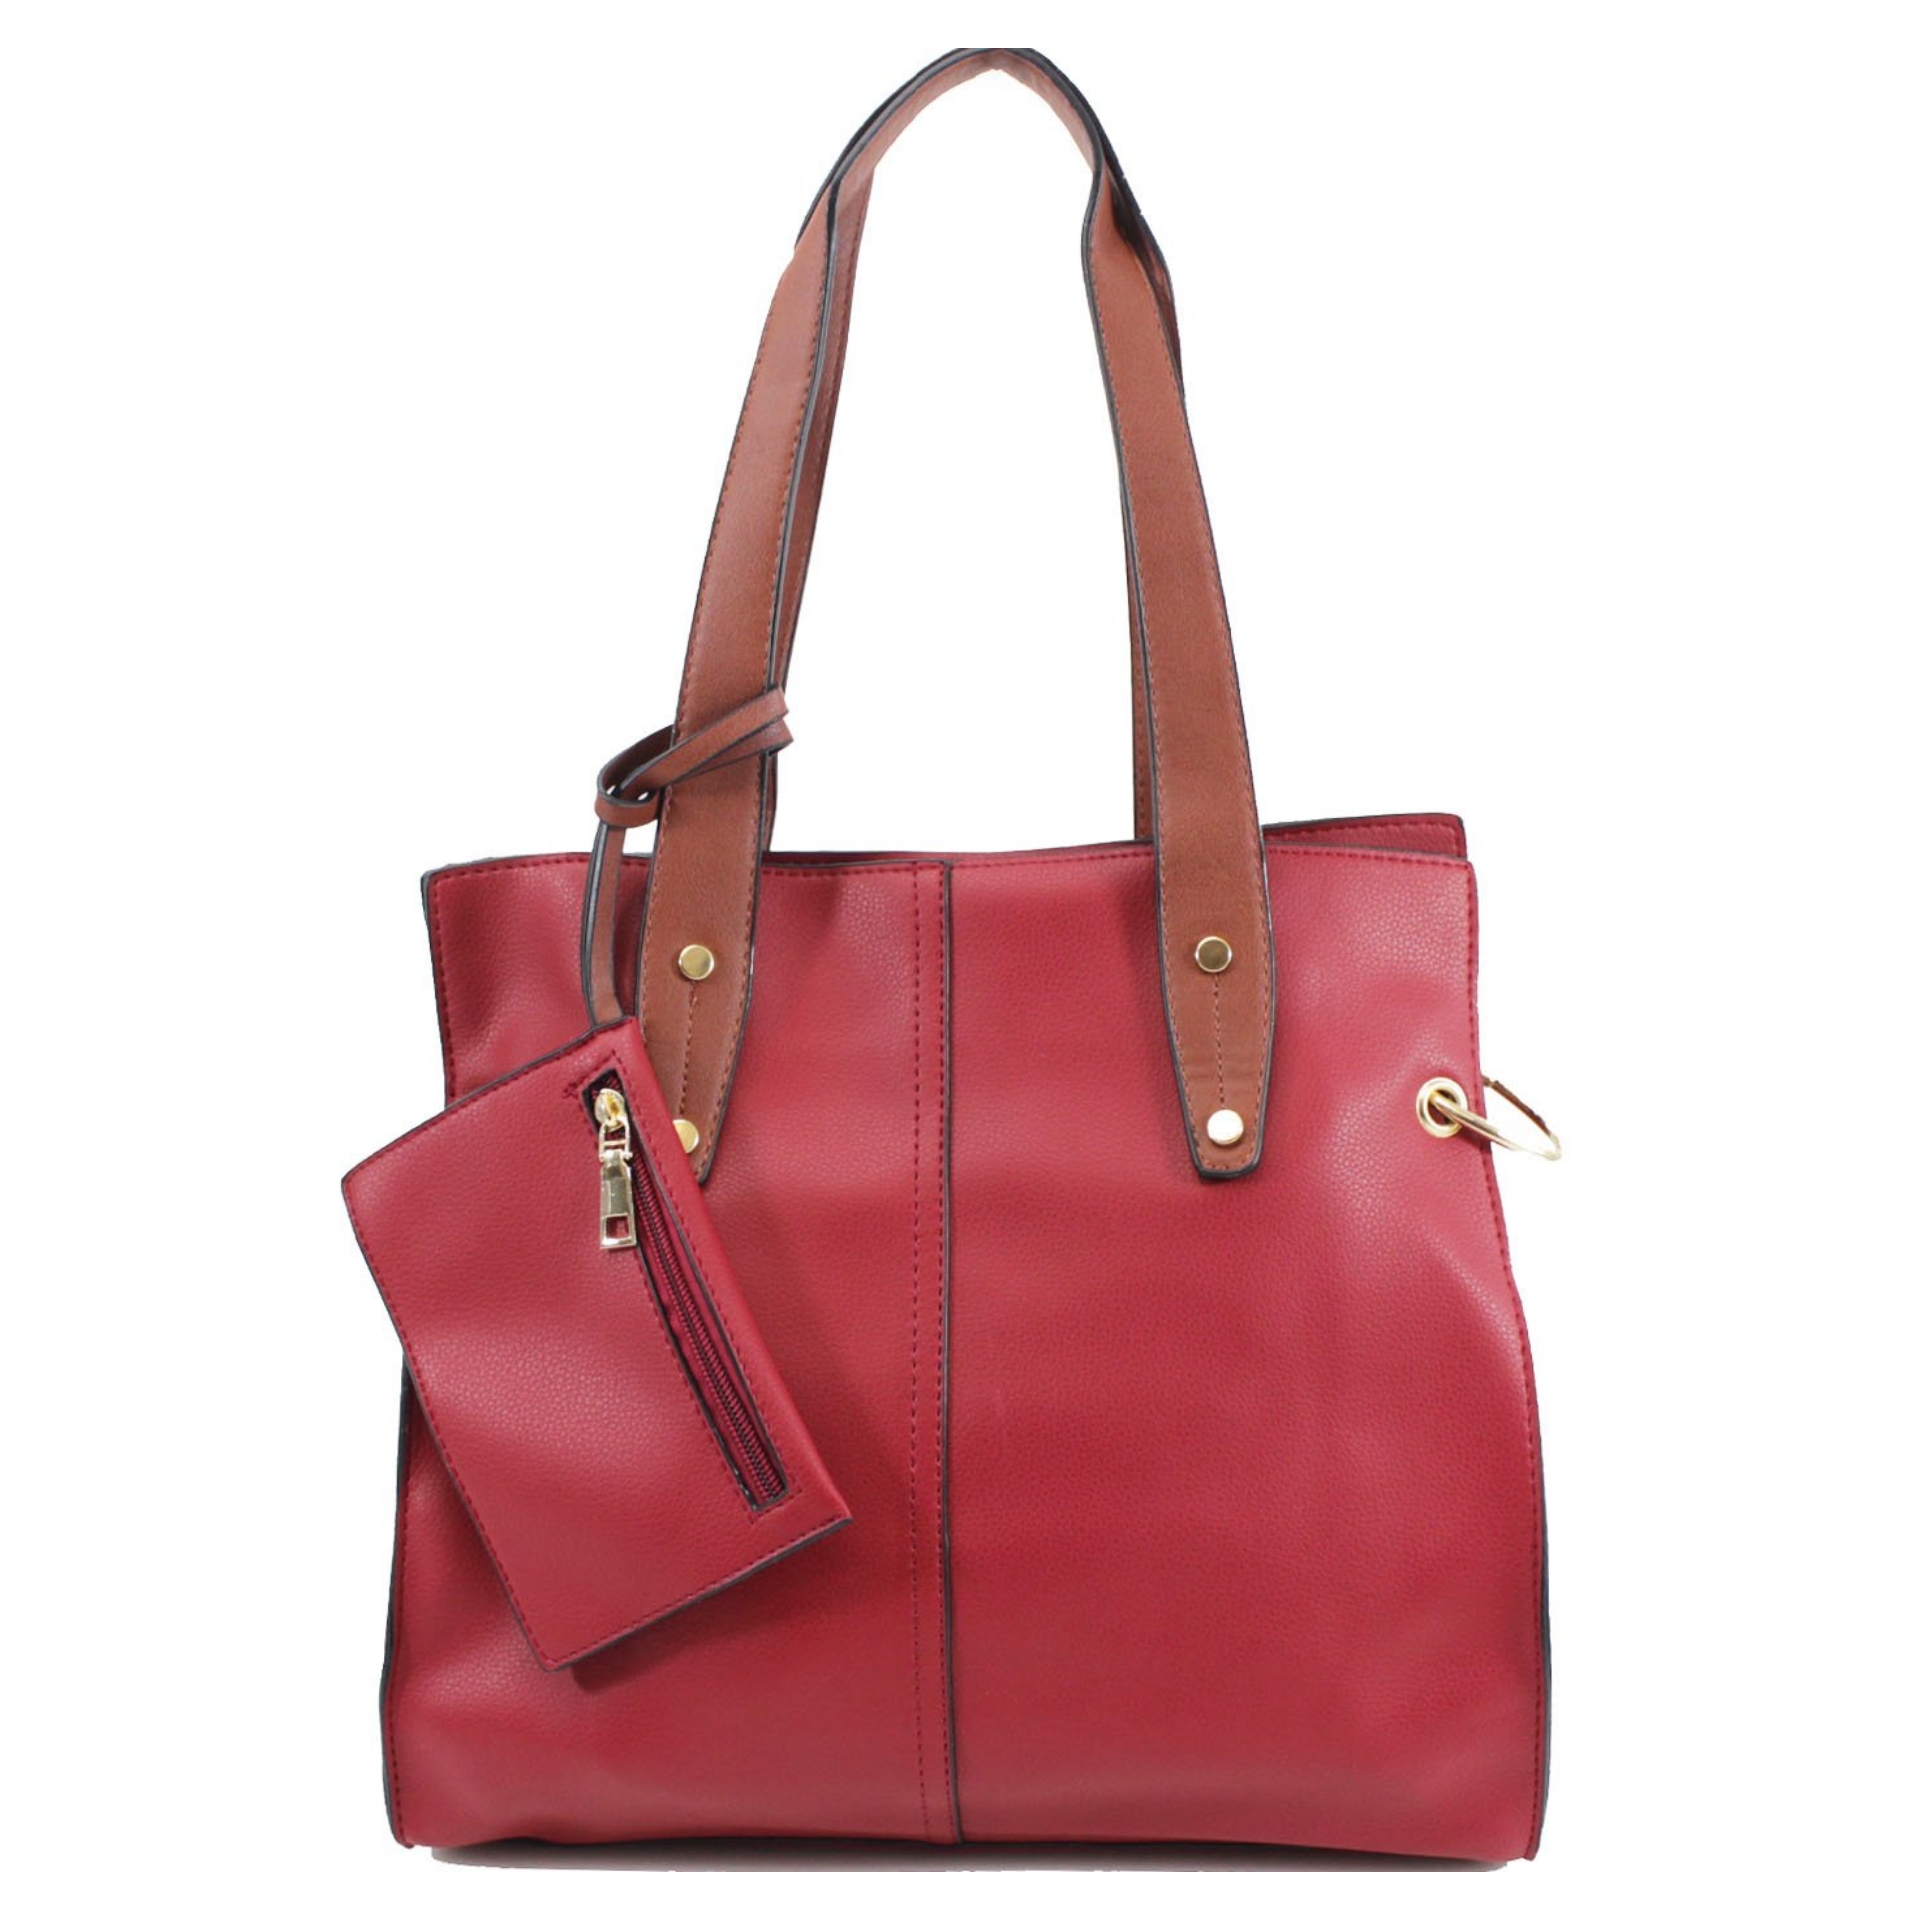 A2636 Bag Within a Bag | Jamie Handbags